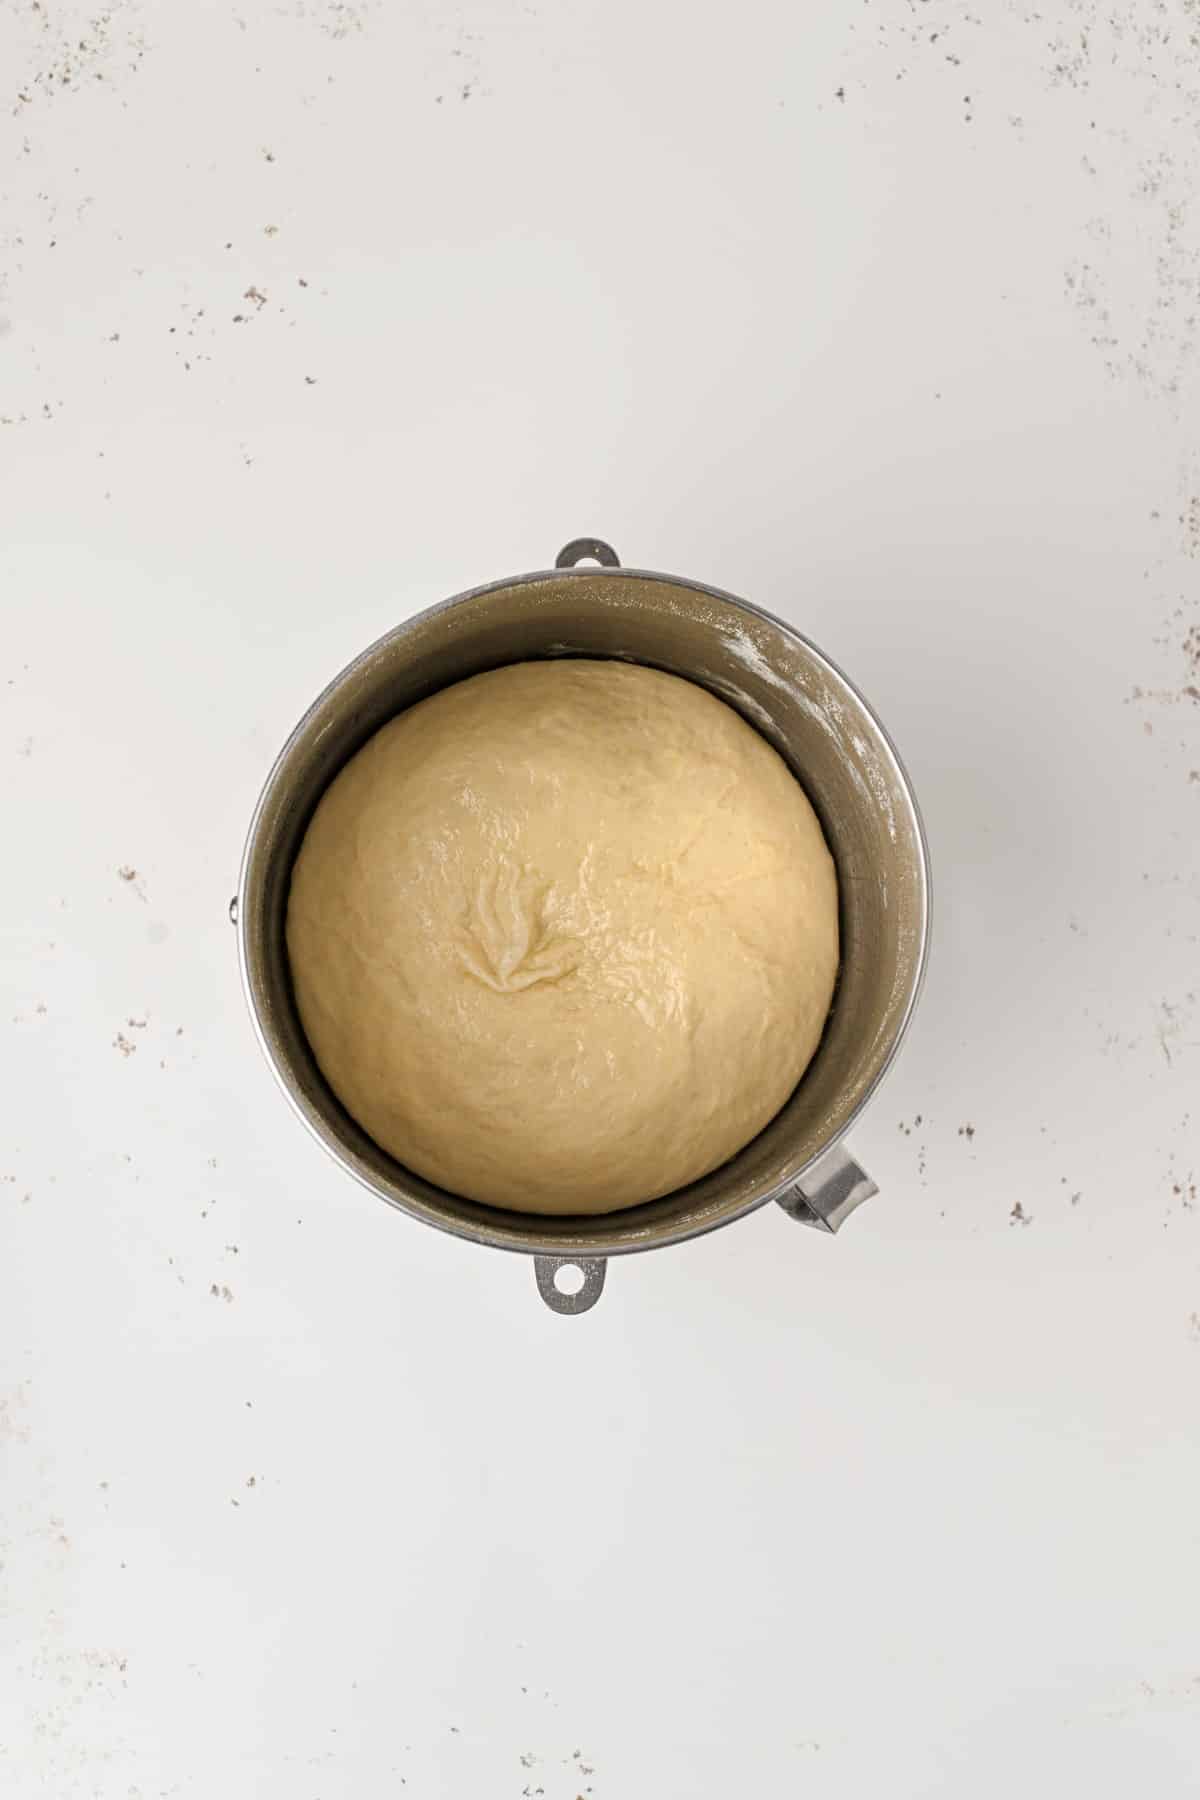 Dough risen in a bowl. 